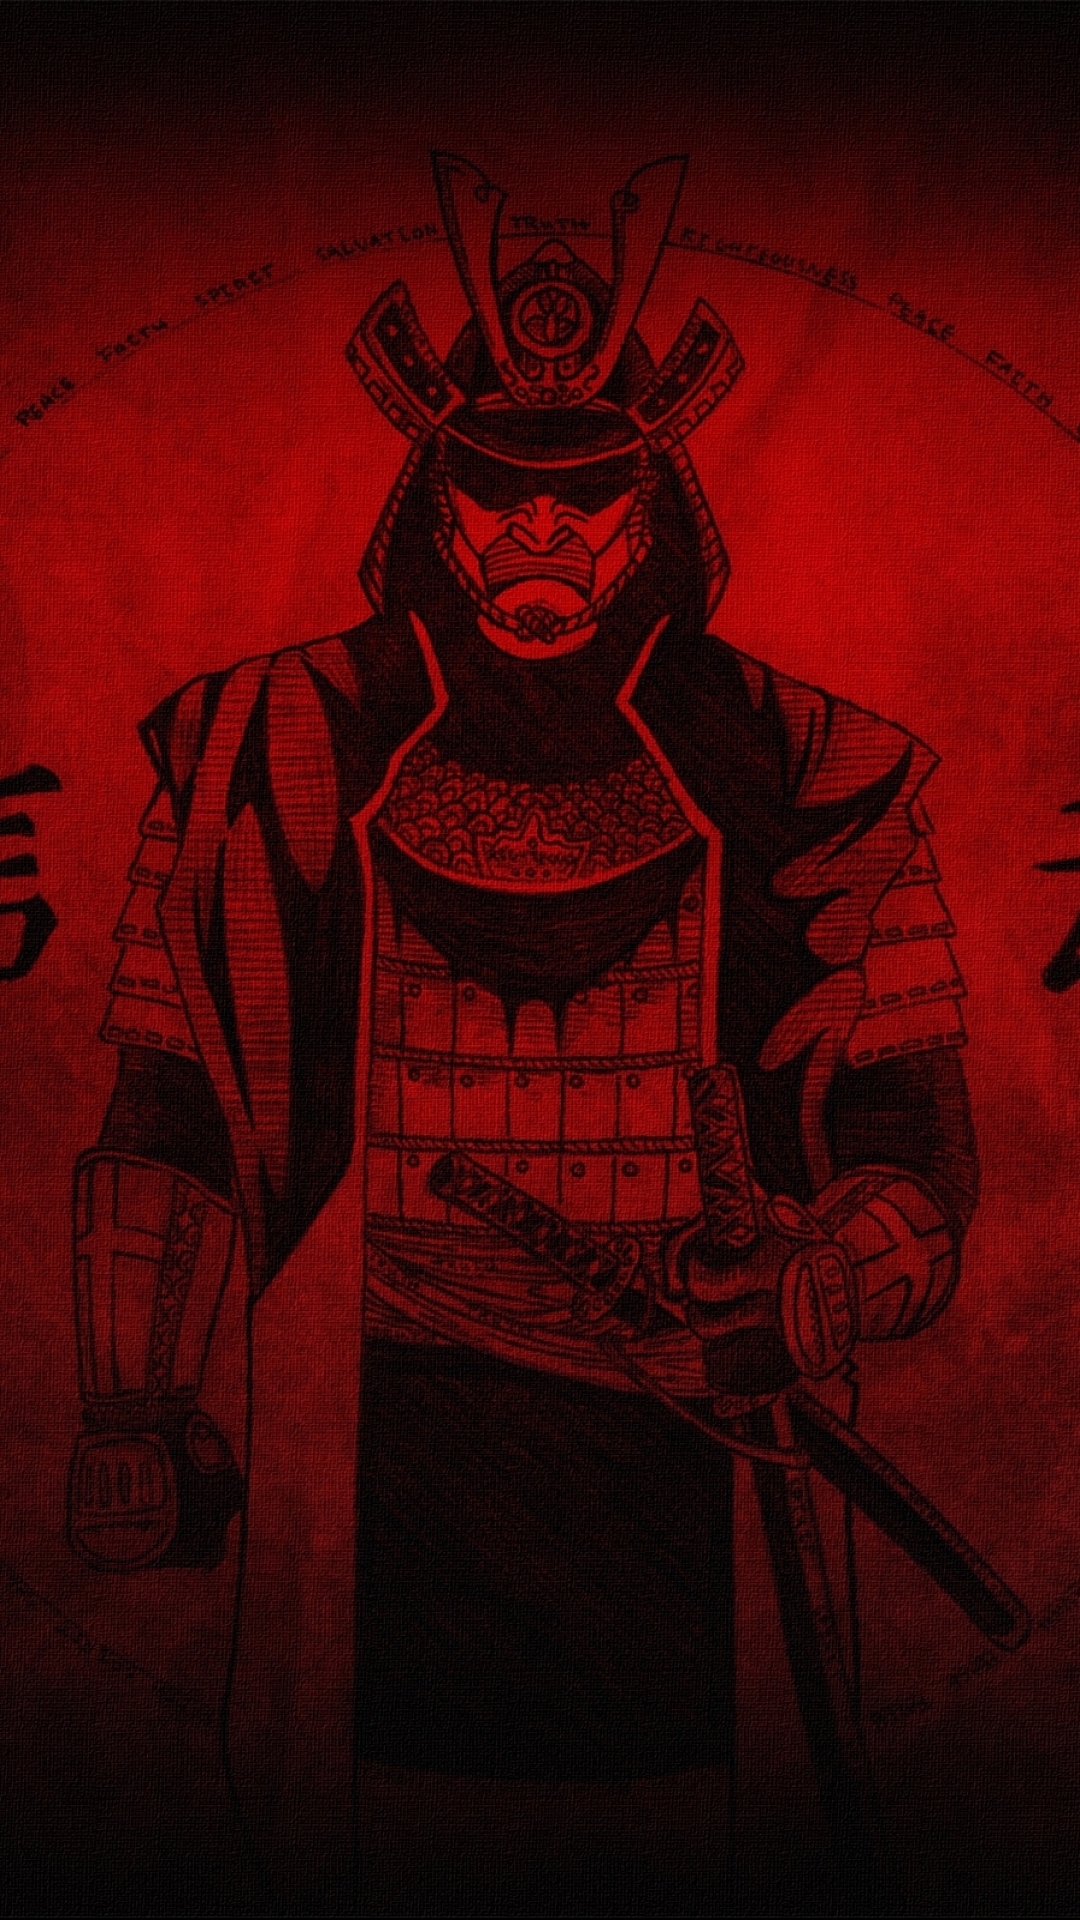 Baixar papel de parede para celular de Fantasia, Samurai gratuito.